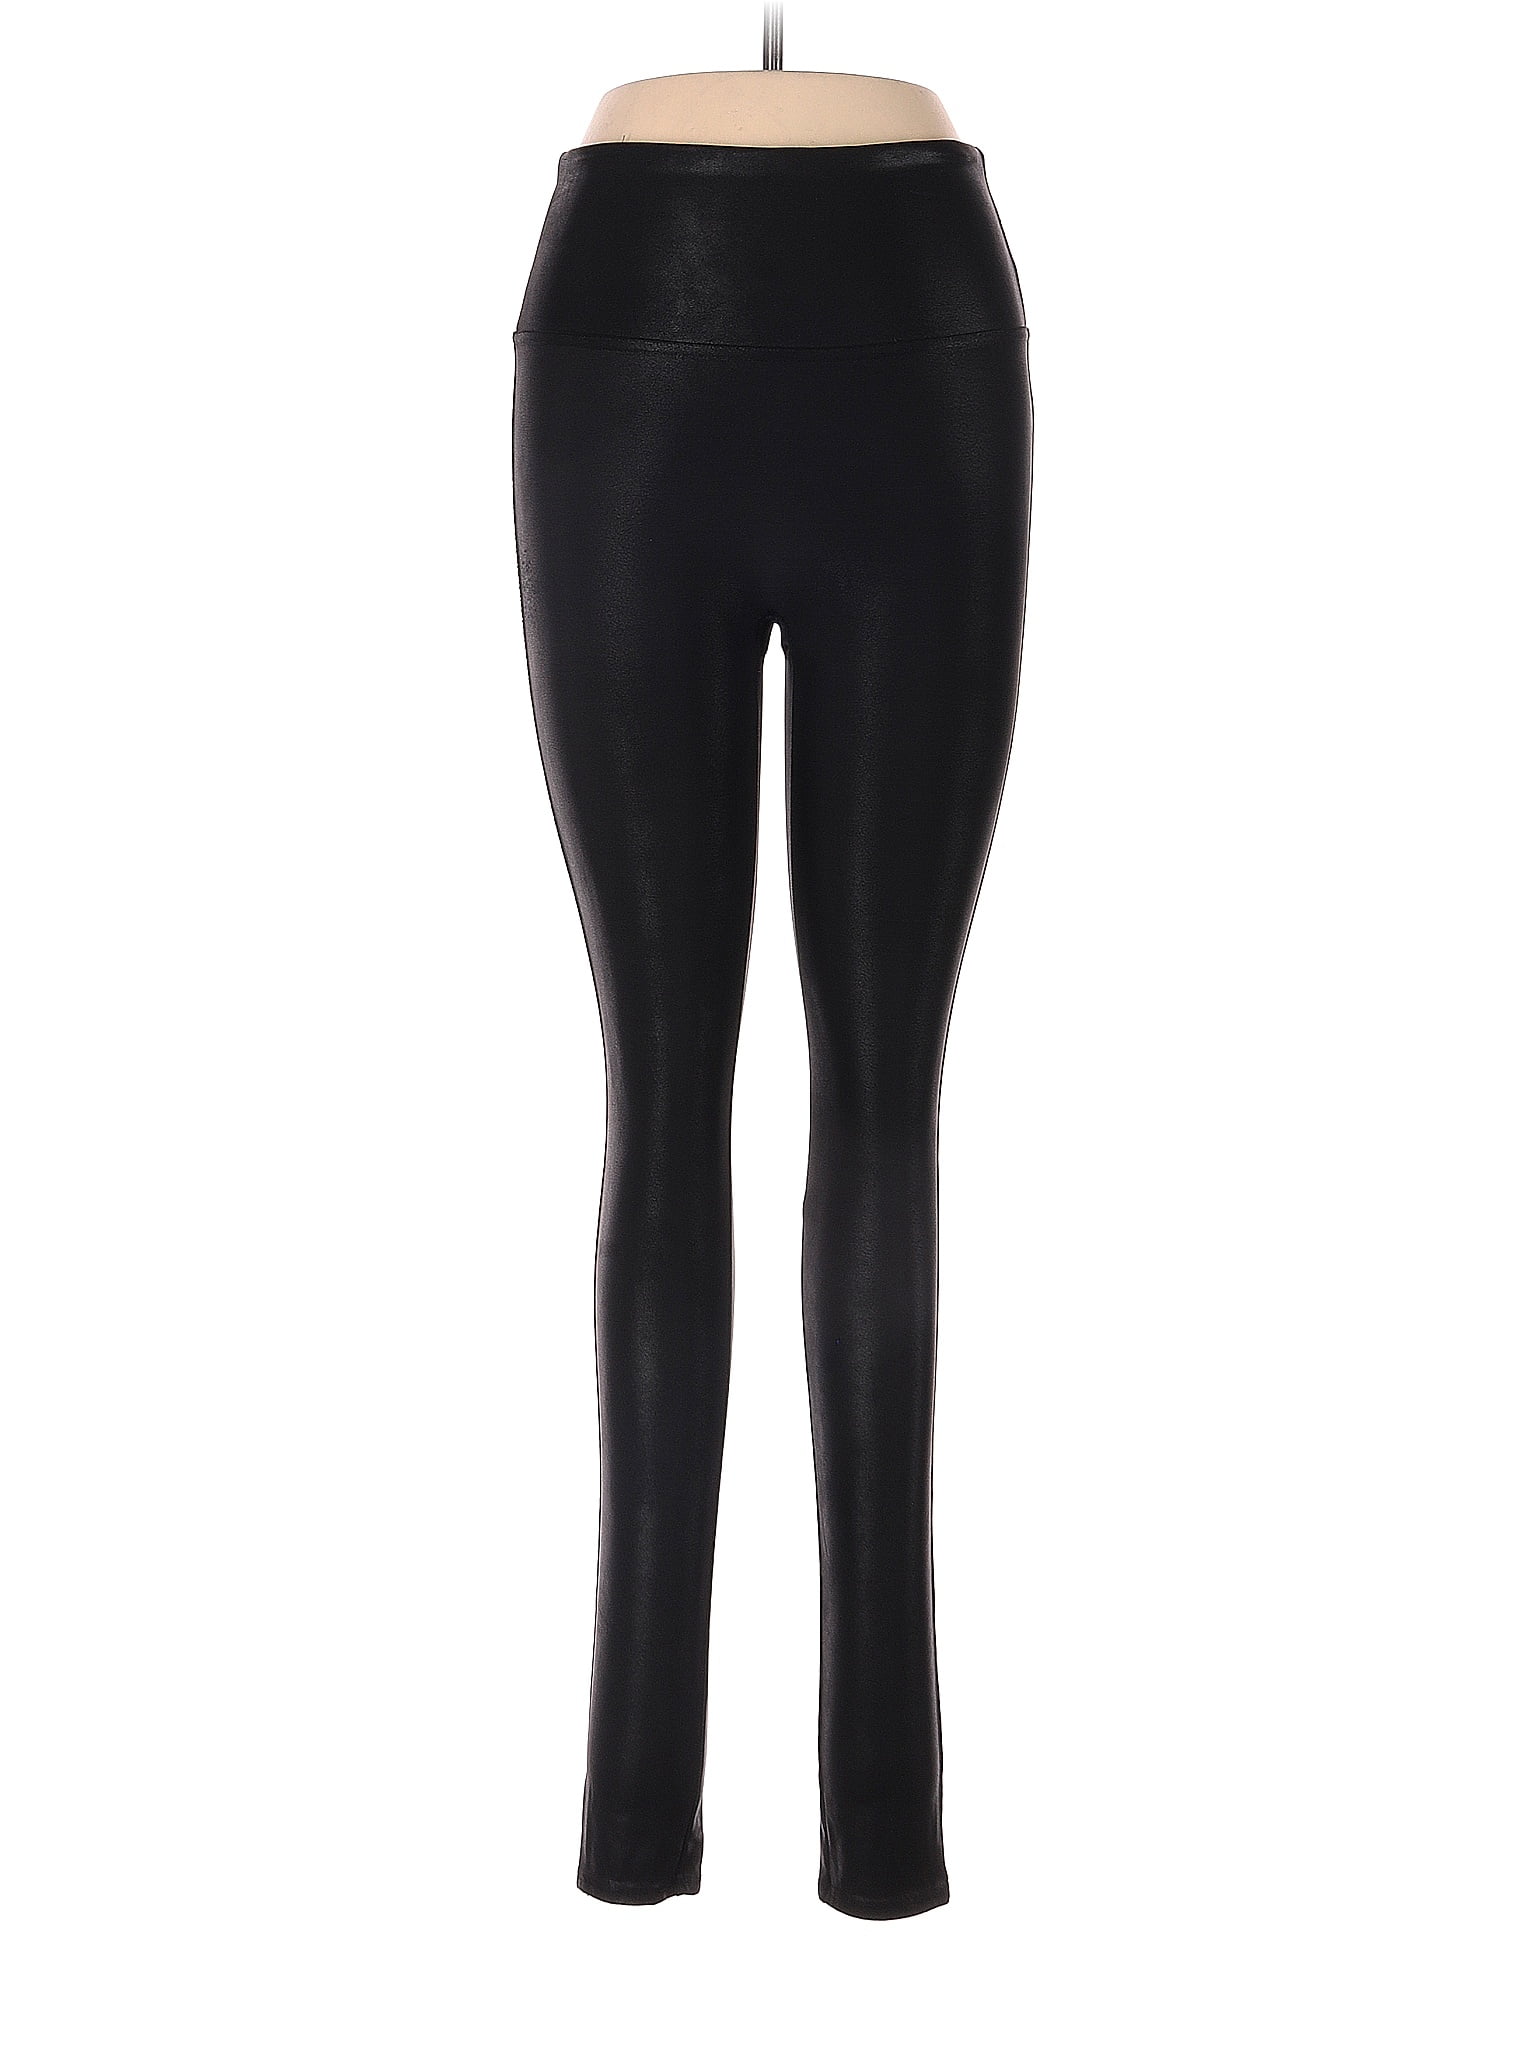 SPANX Black Active Pants Size XL - 54% off